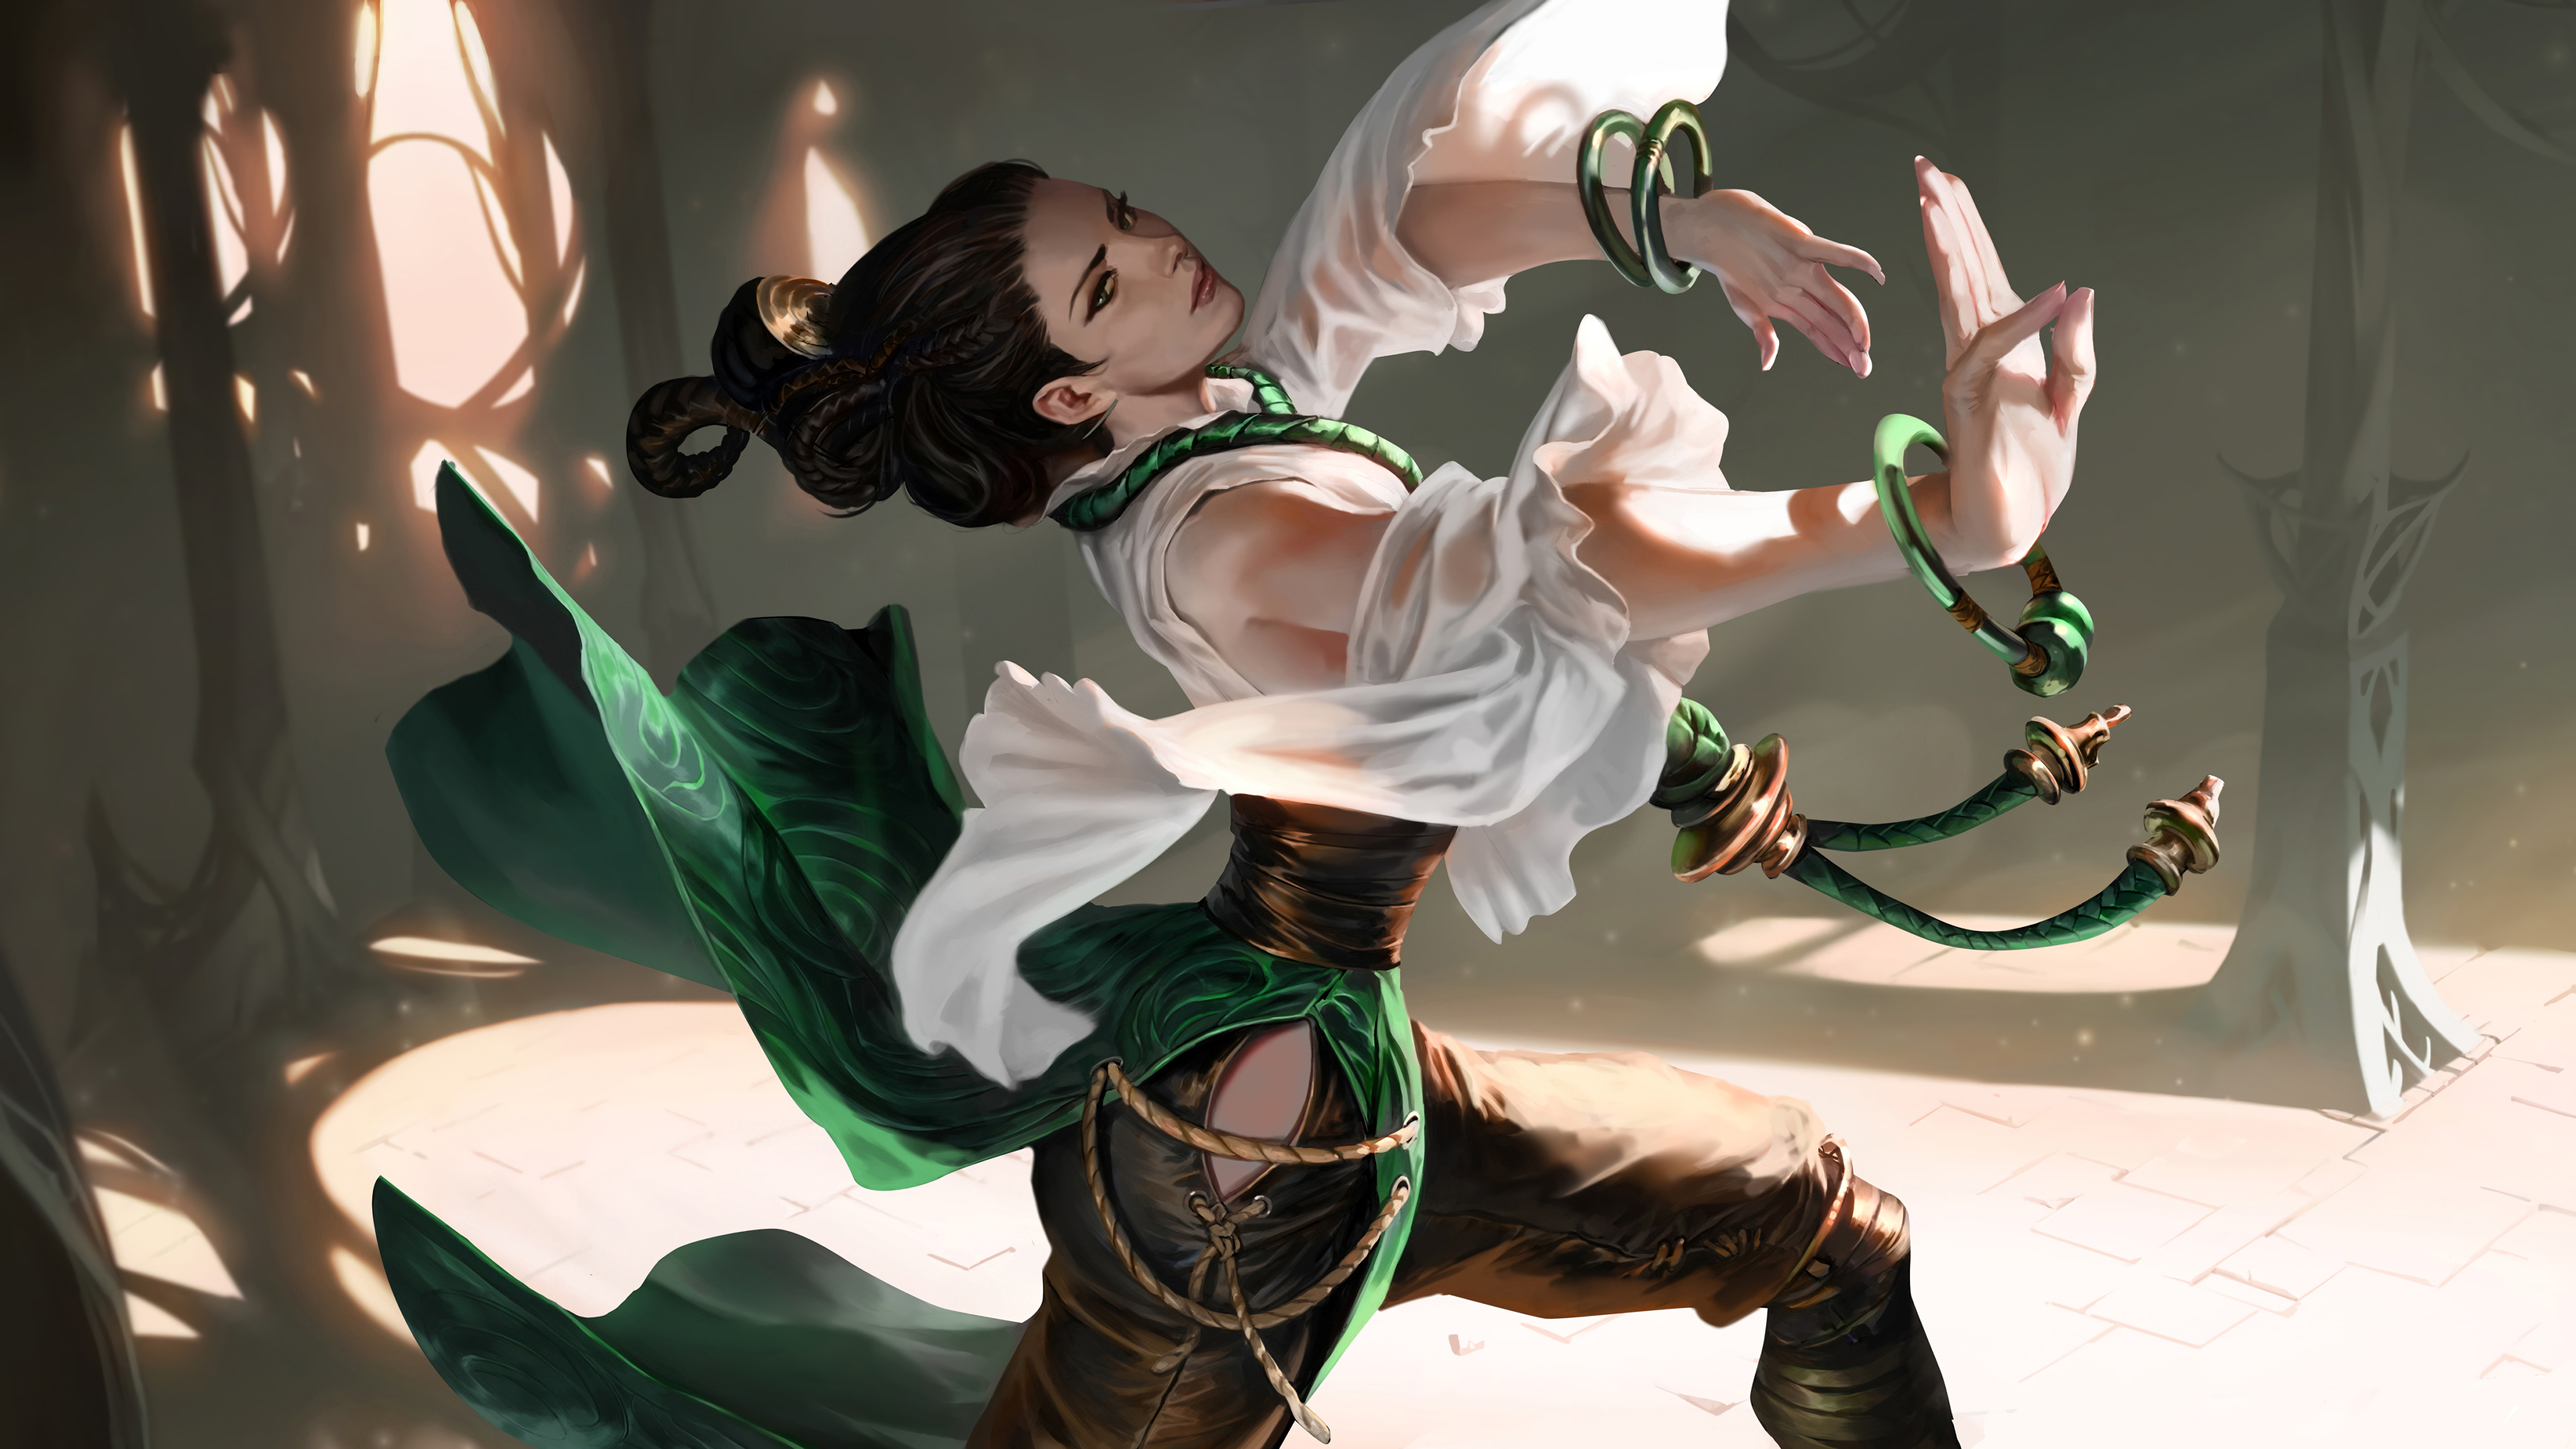 General 3840x2160 Legends of Runeterra fantasy girl PC gaming fantasy art